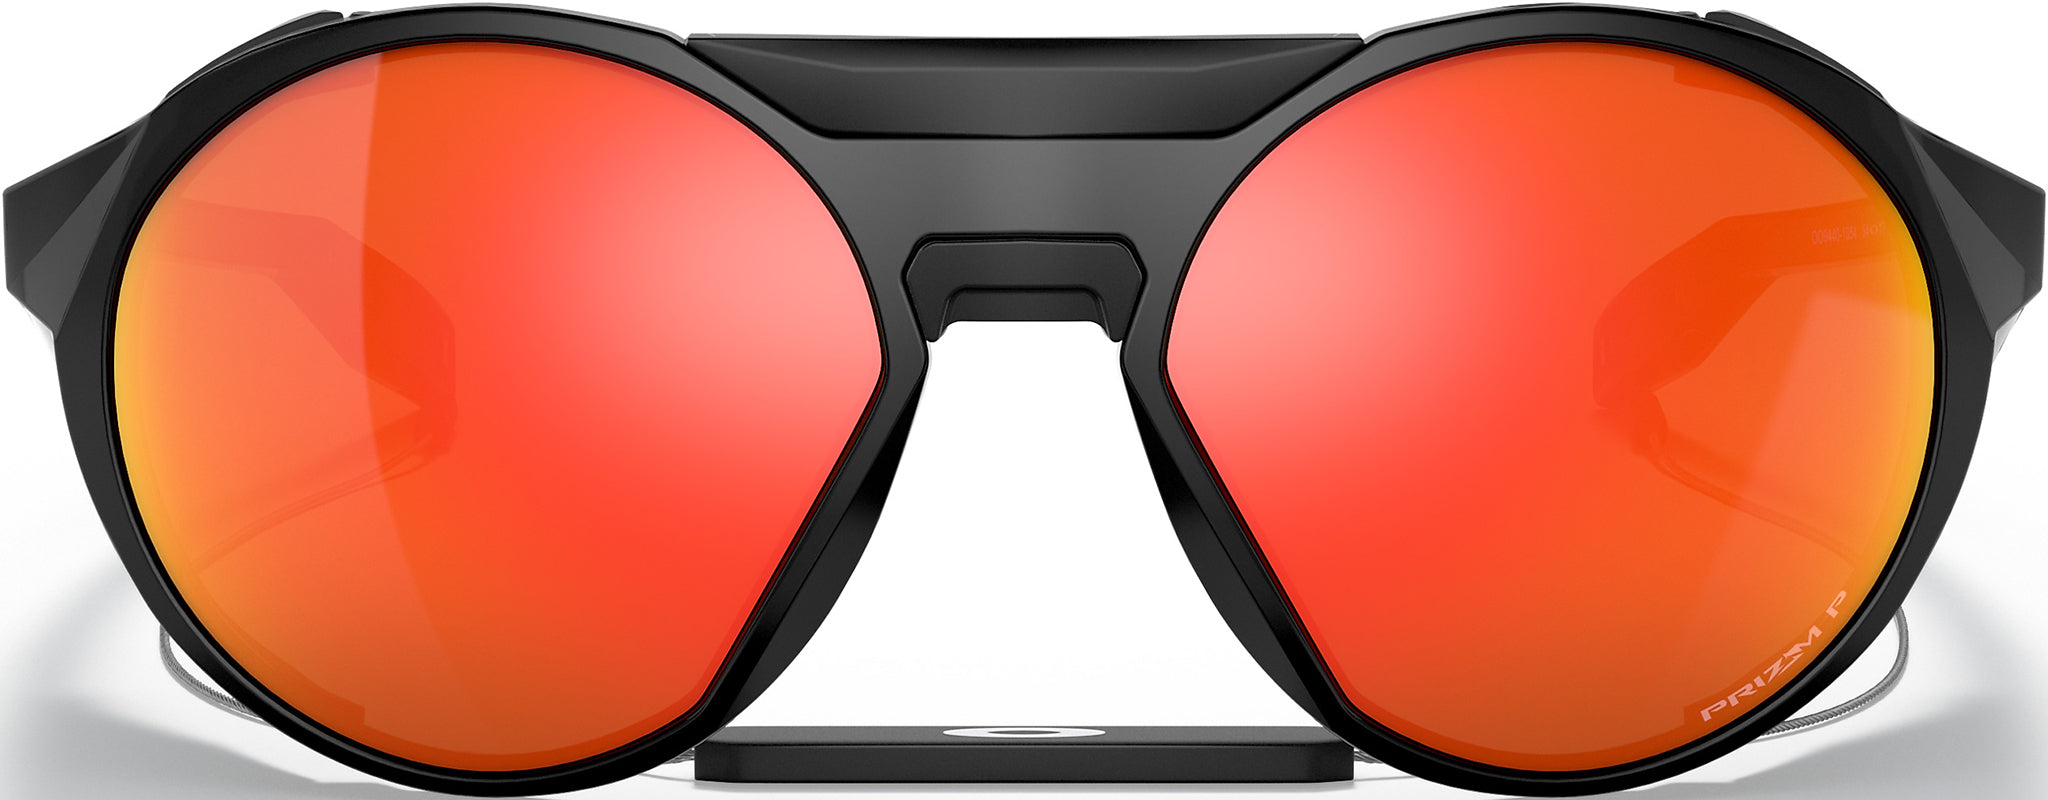 Oakley Clifden Sunglasses - Polished Black - Prizm Ruby Iridium Polarized  Lens | Altitude Sports